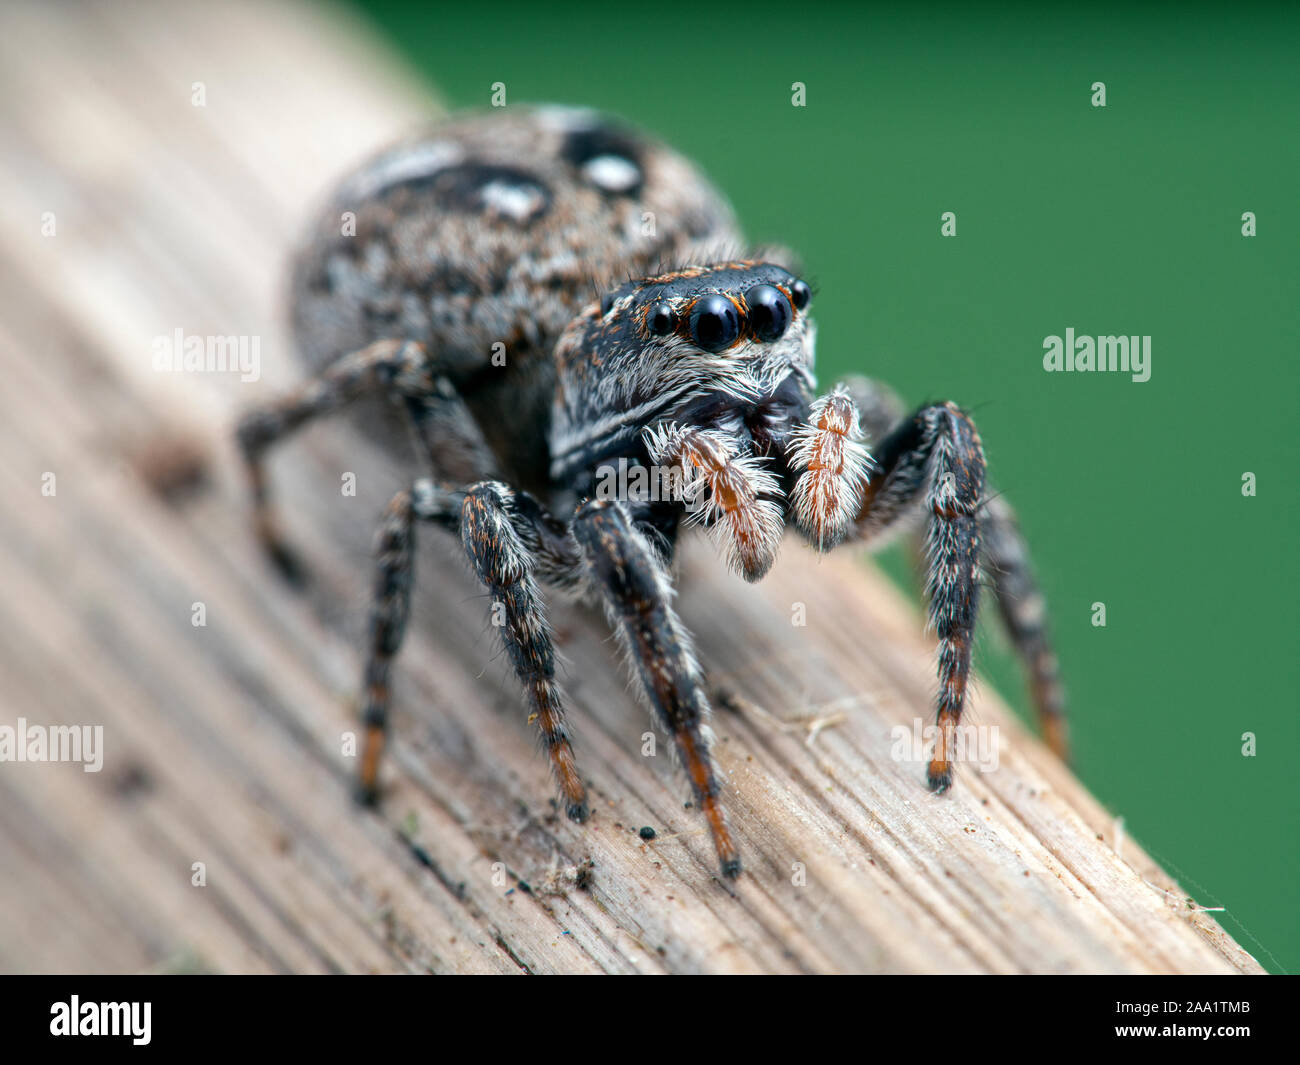 gravid female jumping spider, Calositticus floricola palustris, on a plant stem,  close-up 3/4 view Stock Photo